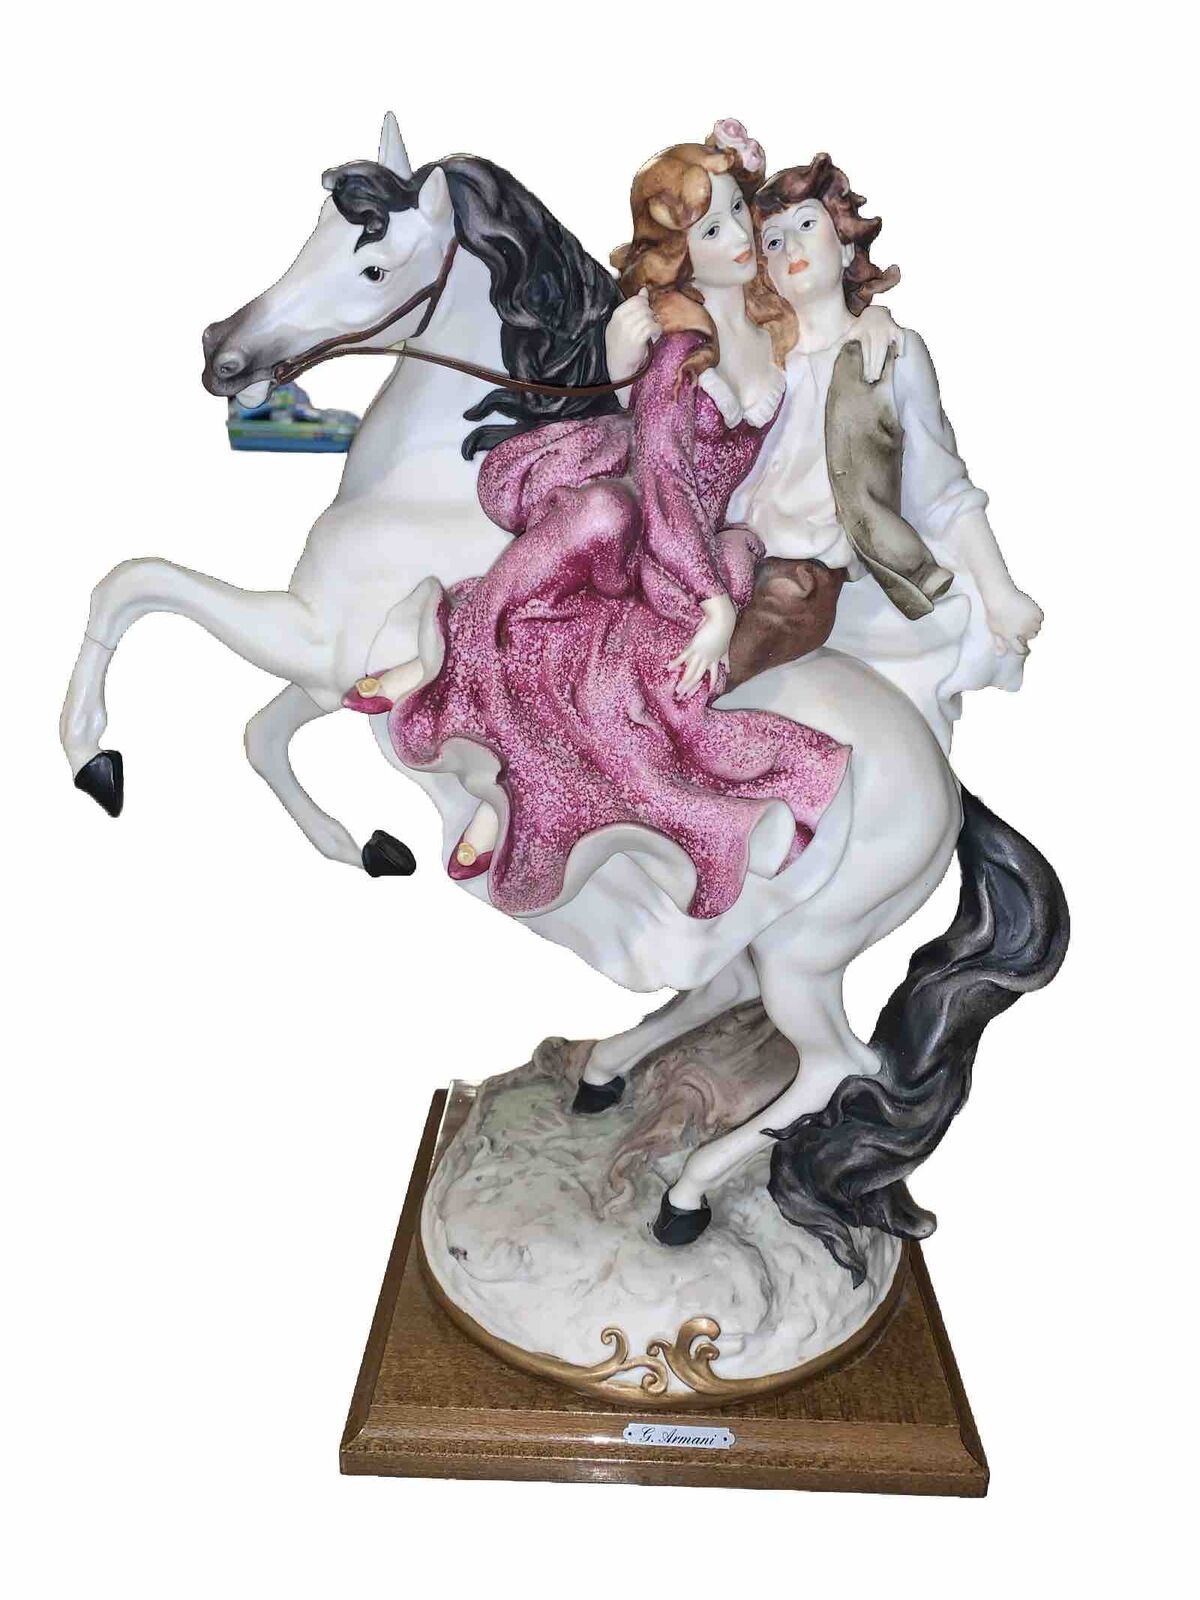 Giuseppe Armani Sculpture 1983  Signed 625 C  Couples on Horse Rare